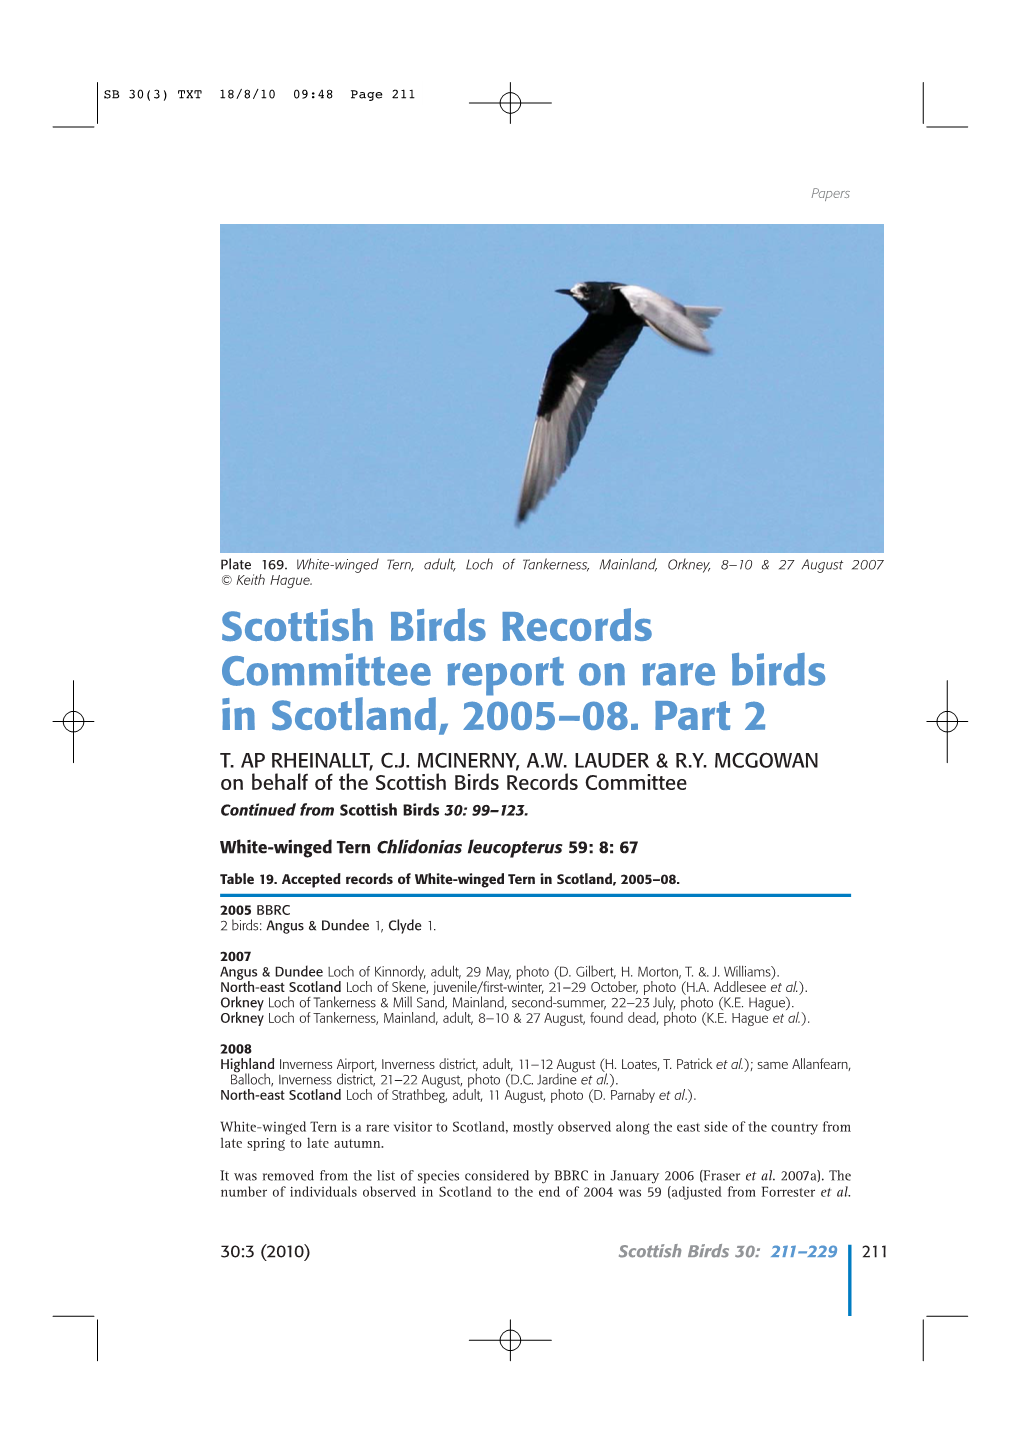 Scottish Birds Records Committee Report on Rare Birds in Scotland, 2005–08